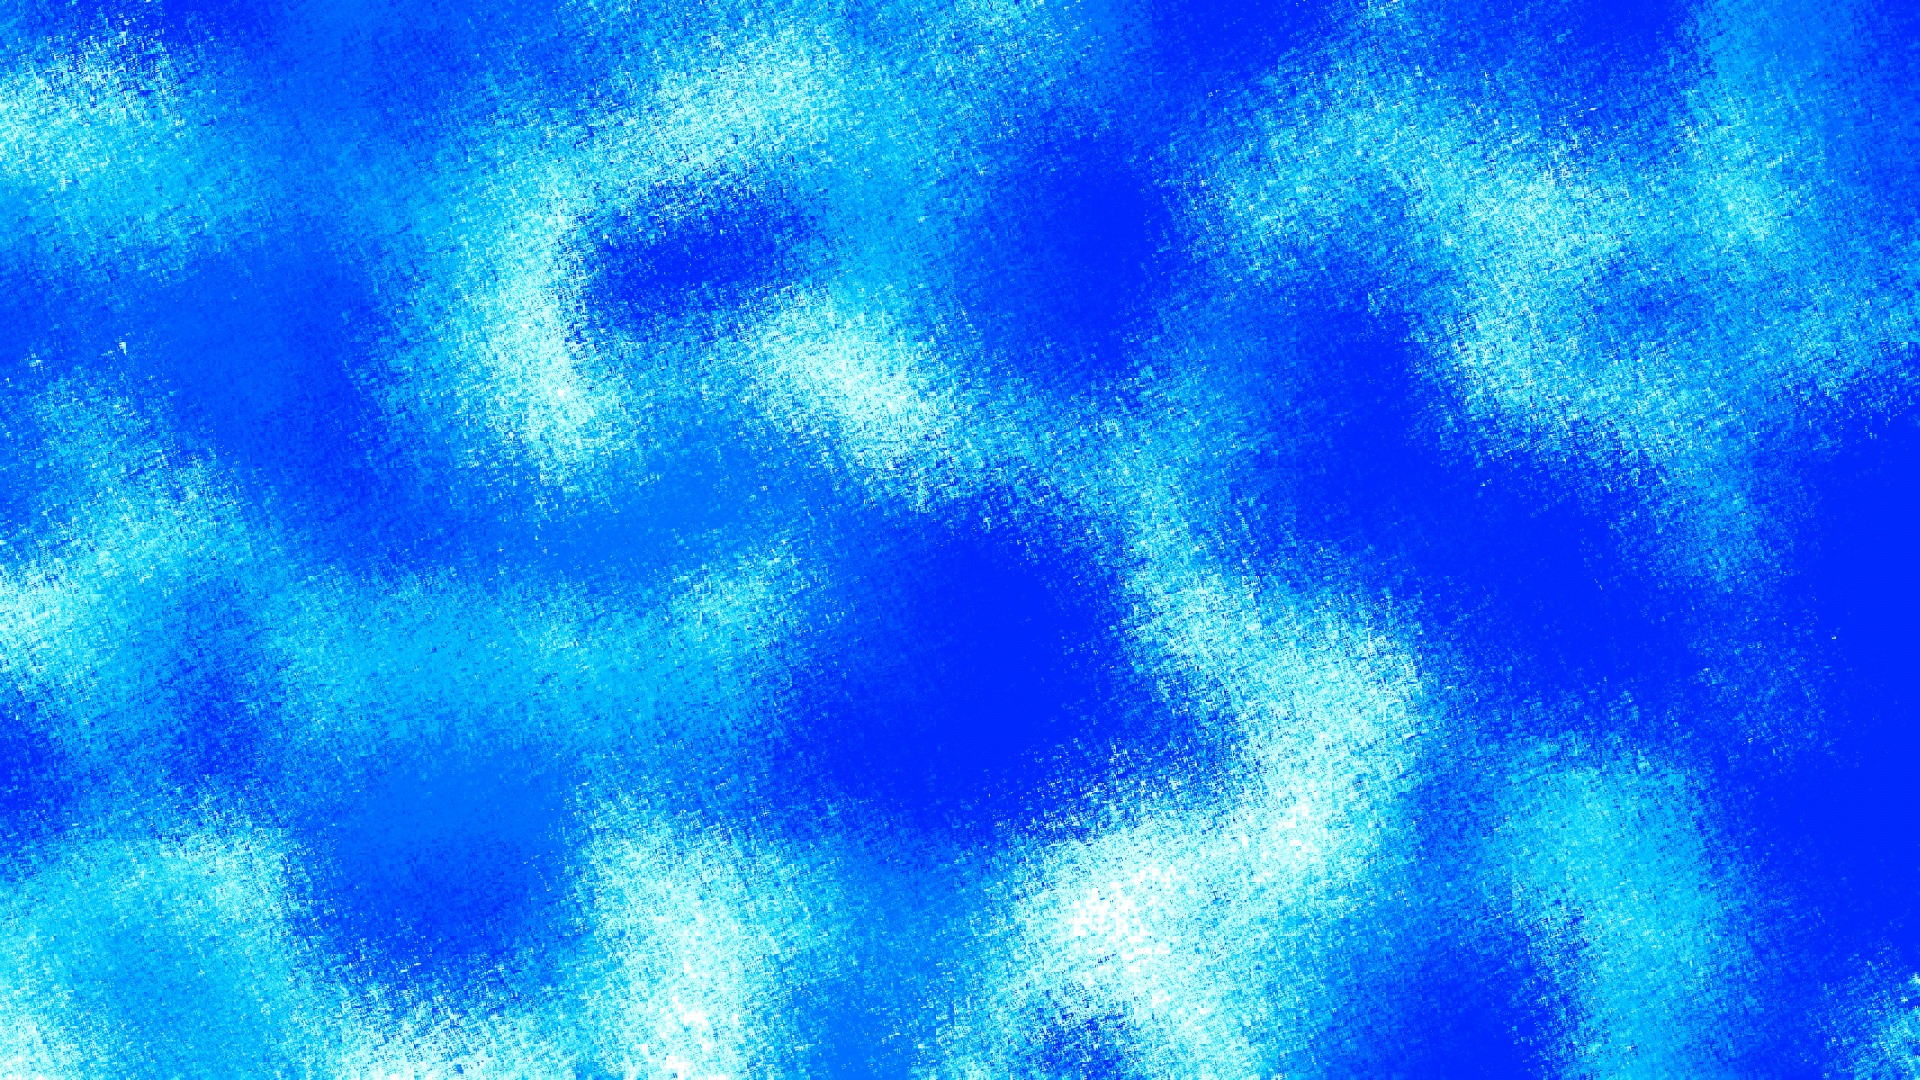 Hazy Blue Wallpaper Background Pattern Design Colorful Roof Tiles